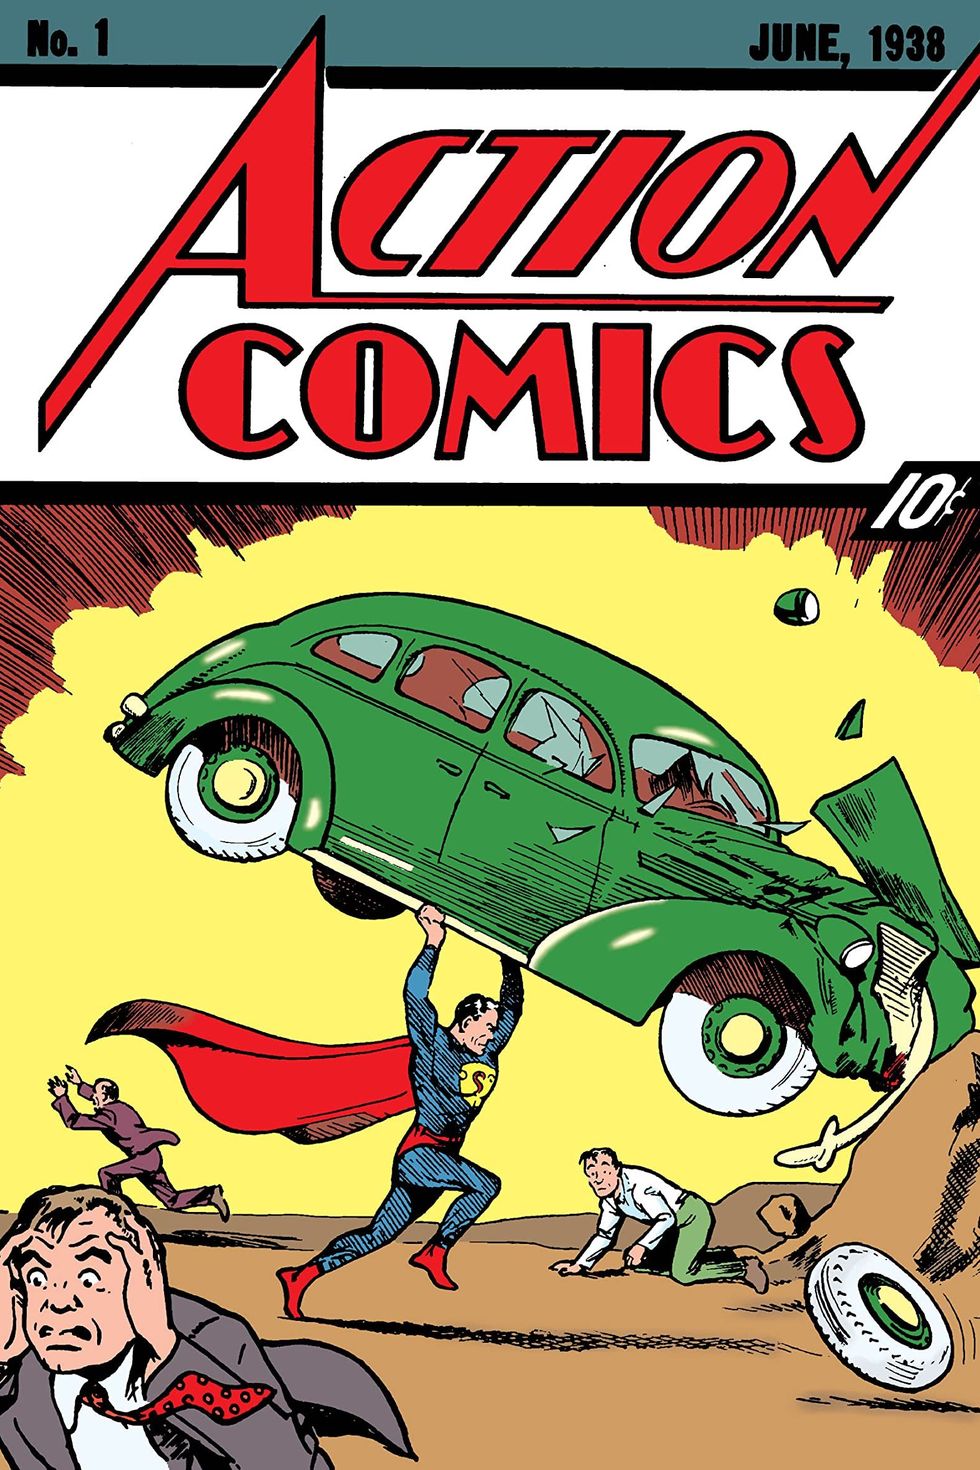 Superman Comics by Jerry Siegel and Joe Shuster